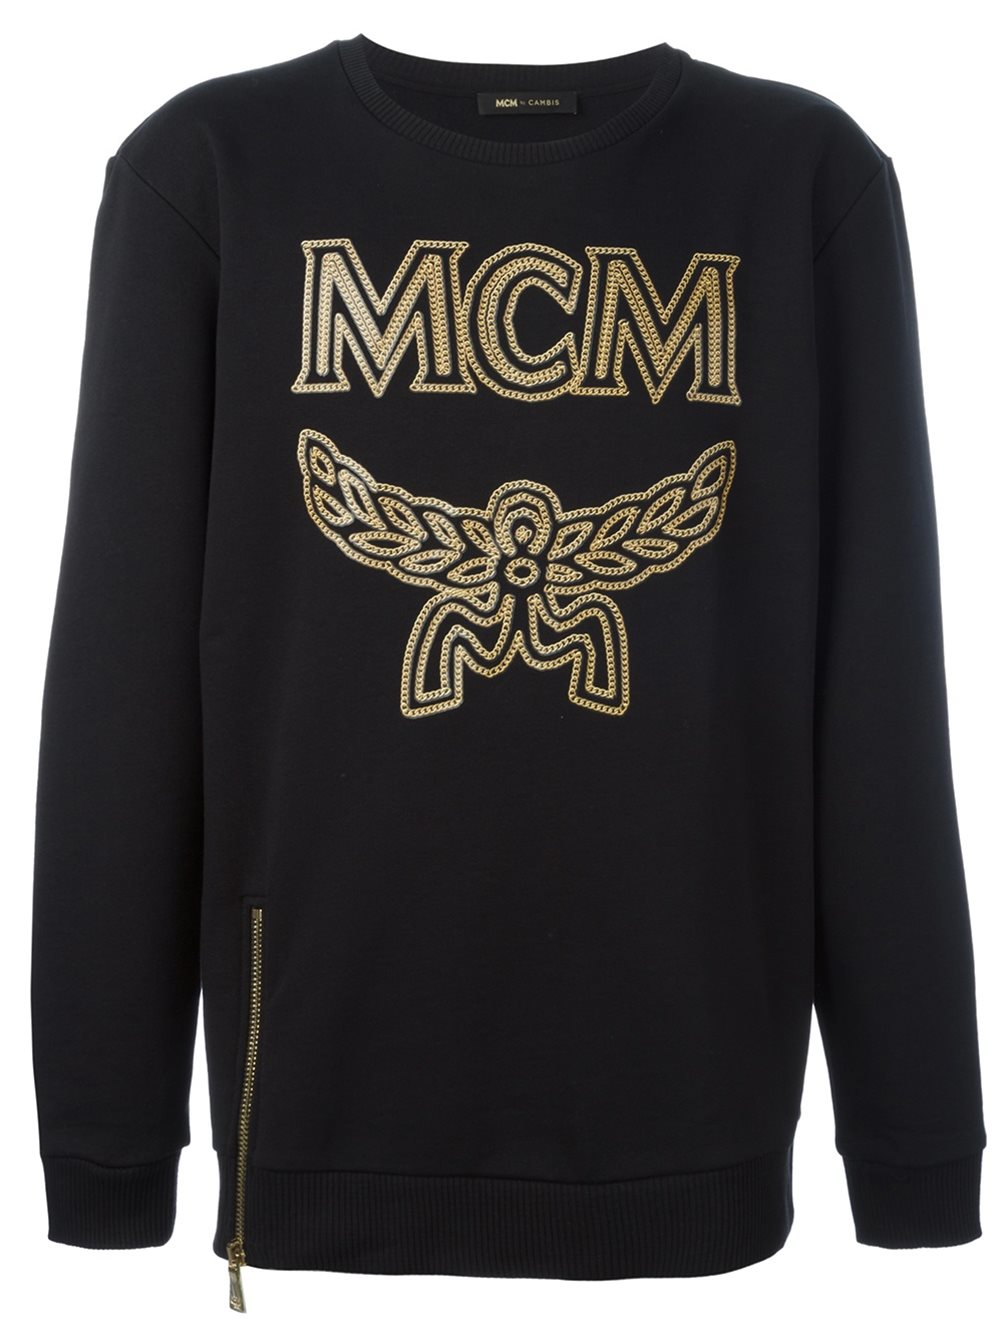 MCM Logo Print Sweatshirt in Black - Lyst